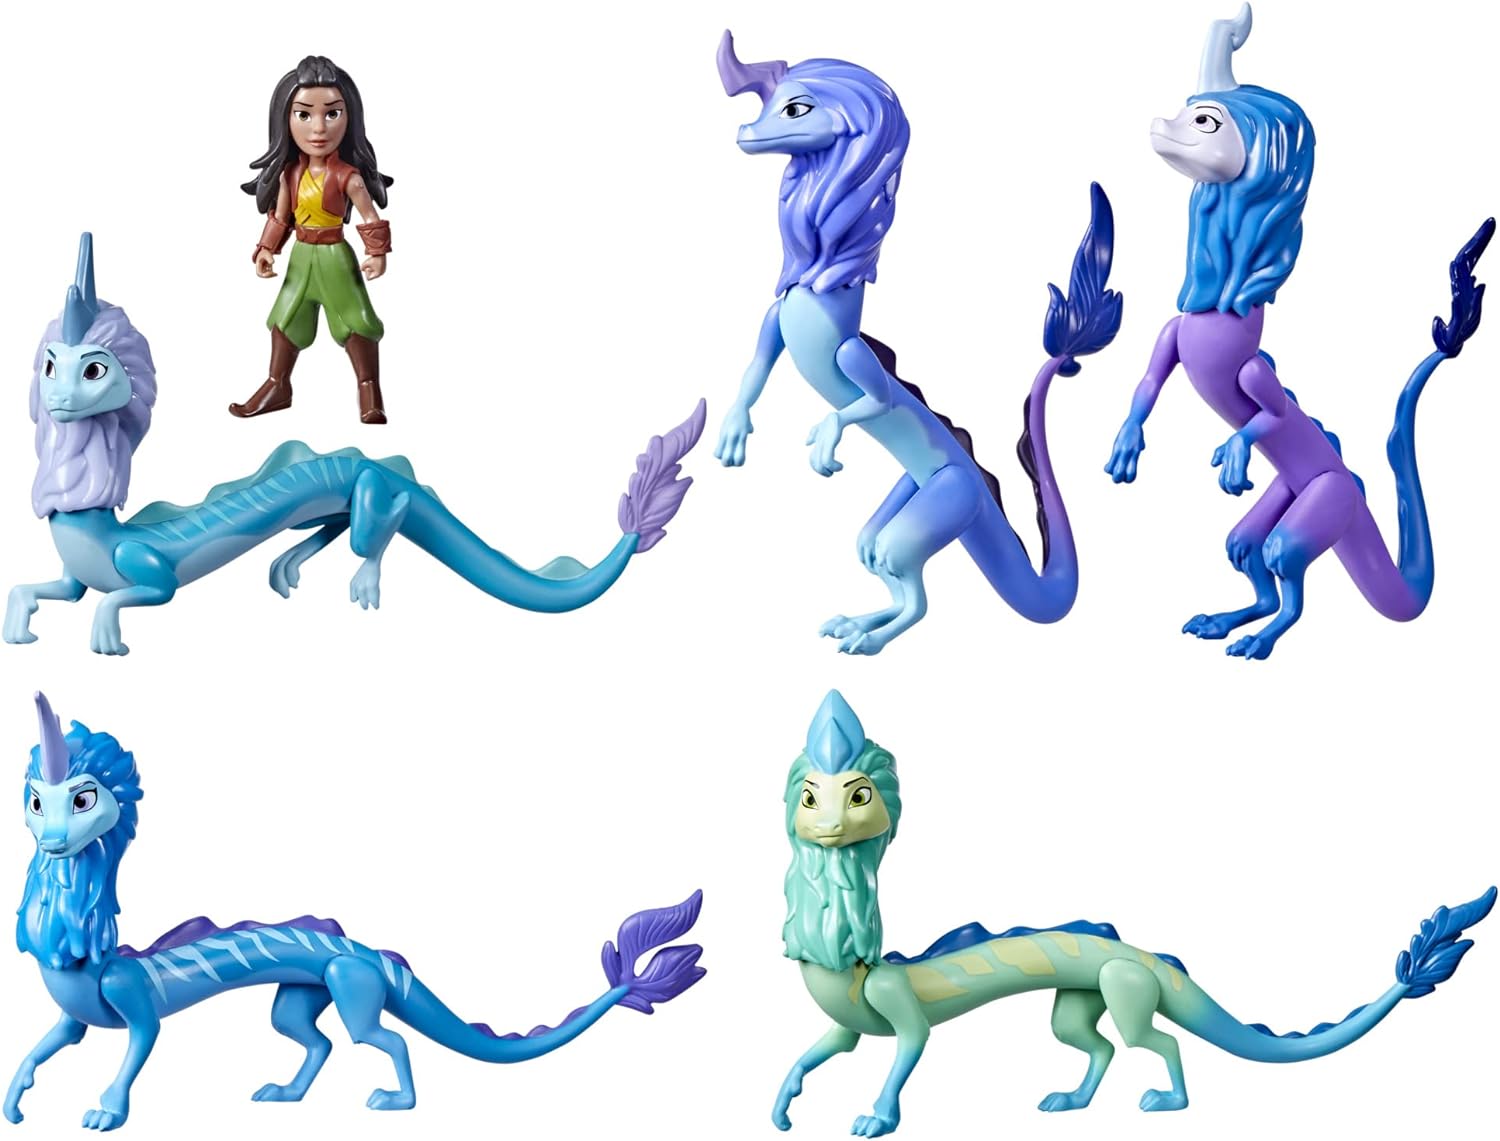 Disney's Raya and The Last Dragon Sisu Family Pack, Includes 5 Dragon Toys and Raya Doll